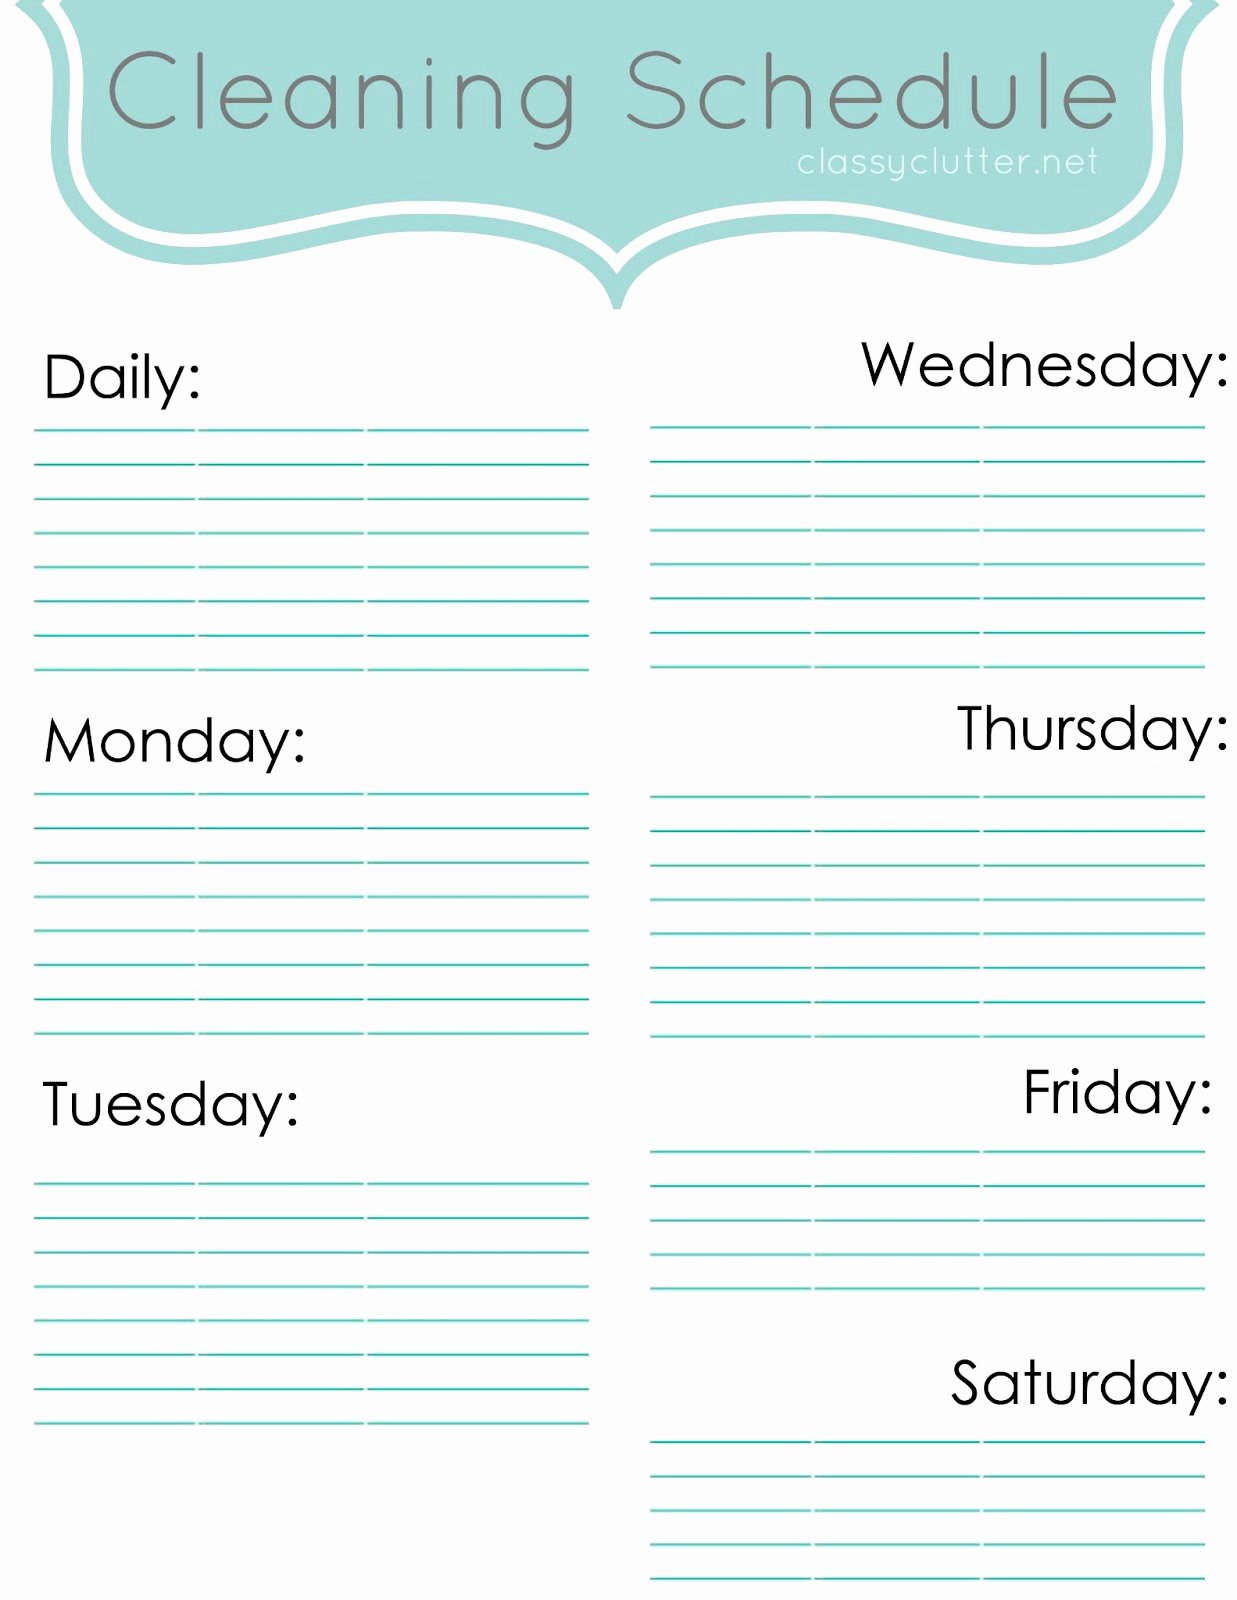 Weekly Cleaning Schedule Template Elegant Weekly Cleaning Schedule Improve Your Cleaning Habits